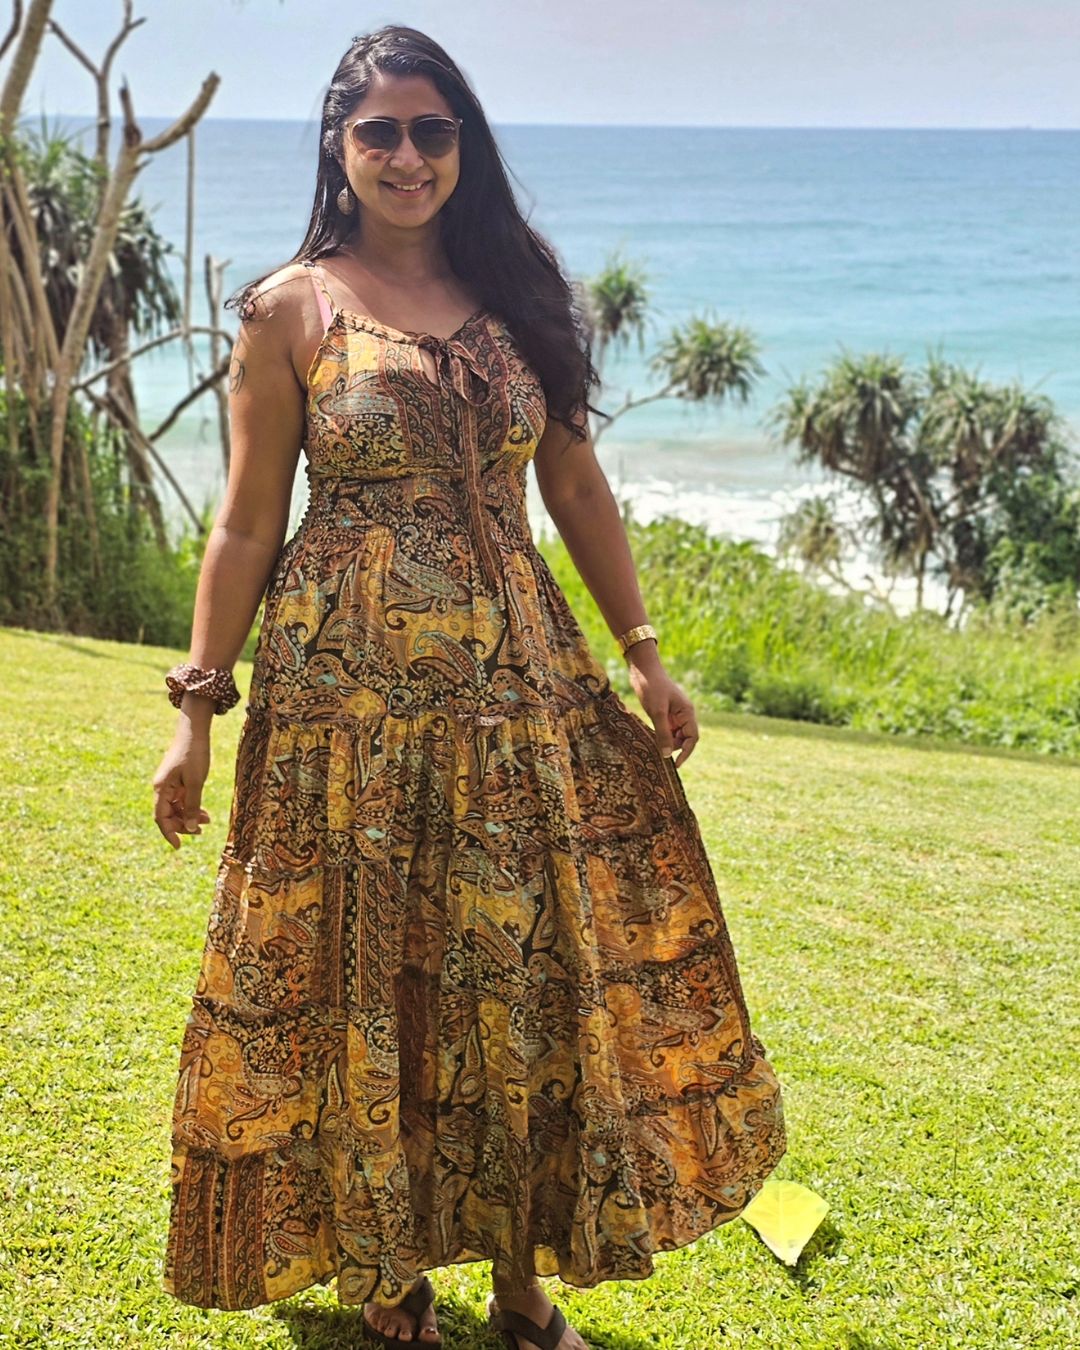 Kaniha Hot Photos In Sleeveless Gown In Her Srilanka Vacation ...